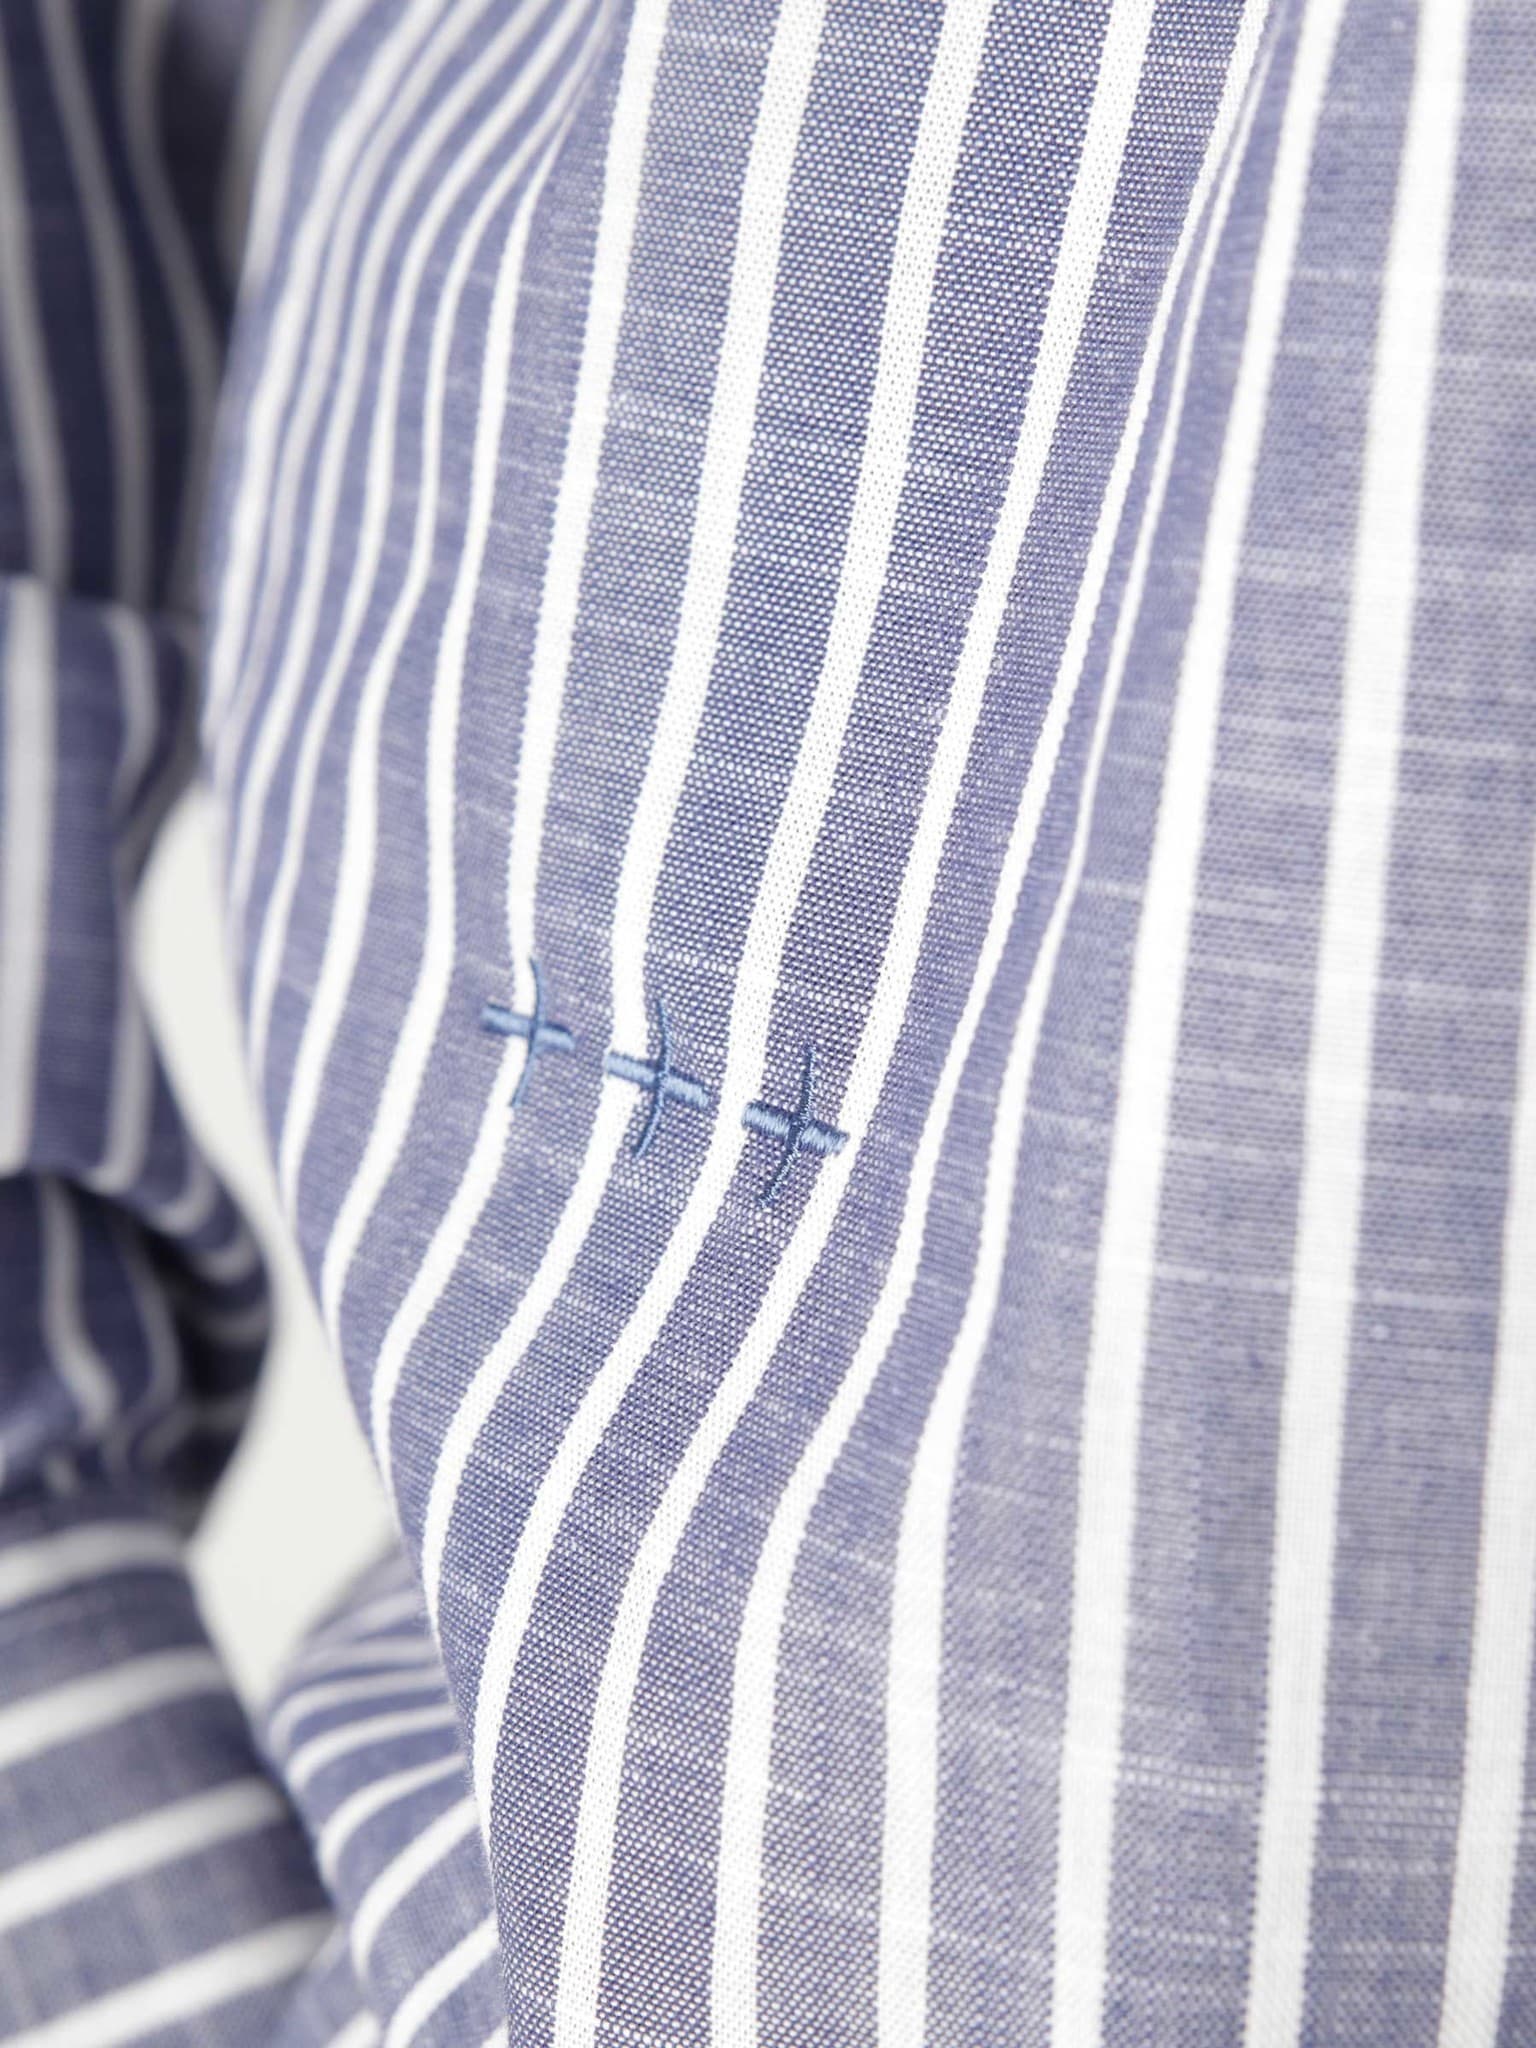 QB44 Stripe Shirt Blue White Regular Stripes